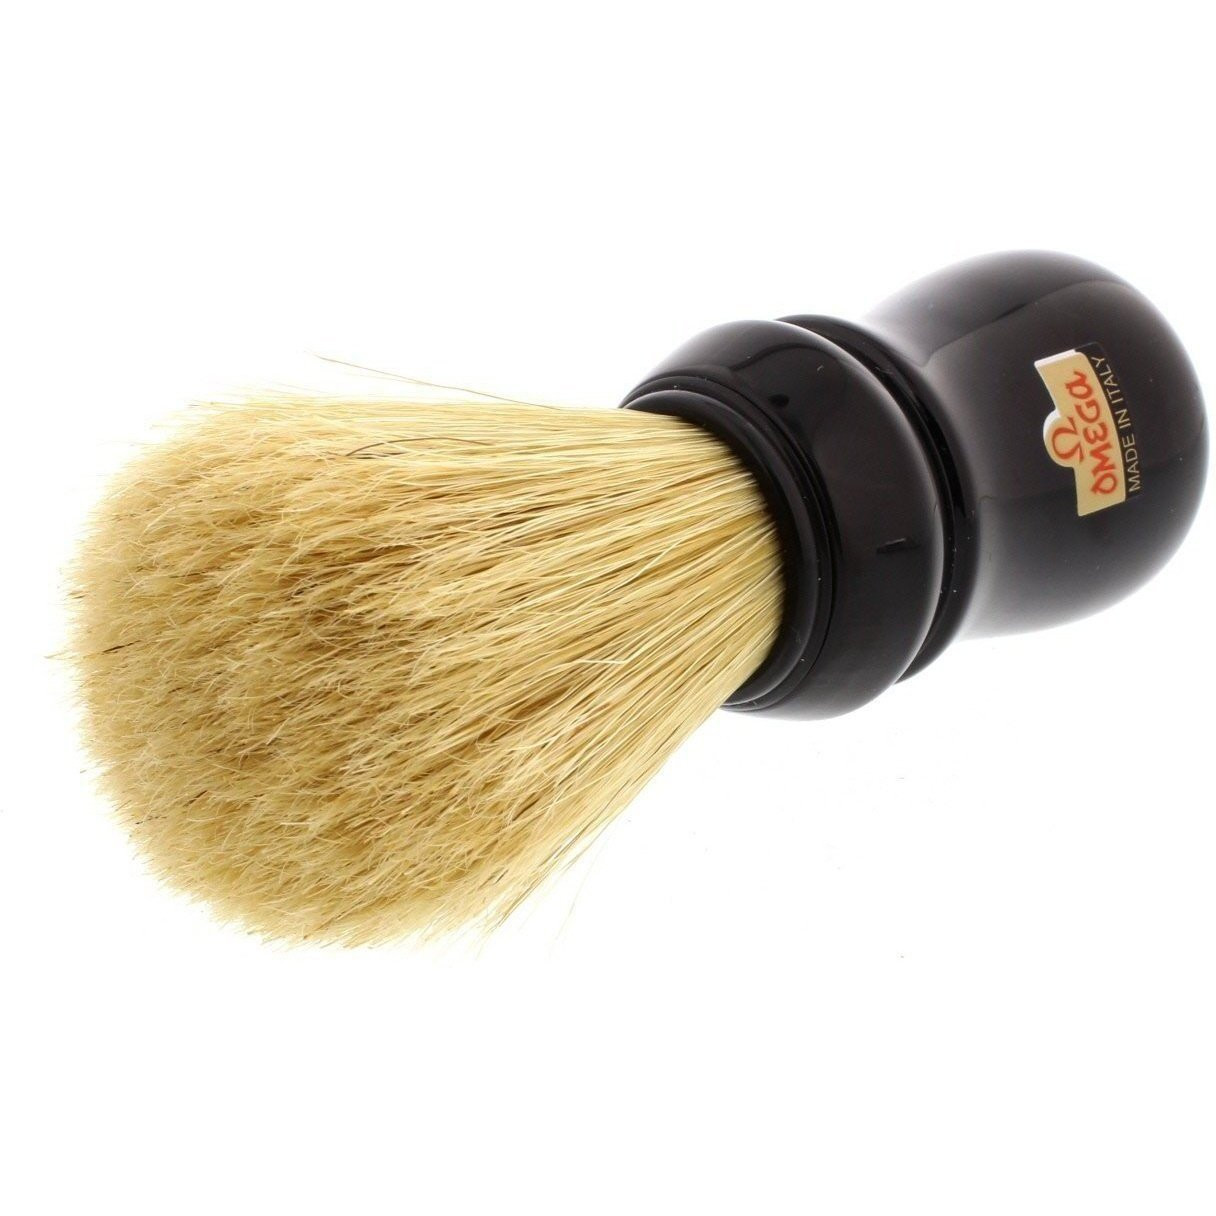 Product image 2 for Omega 10049 Professional Boar Shaving Brush, Black Handle